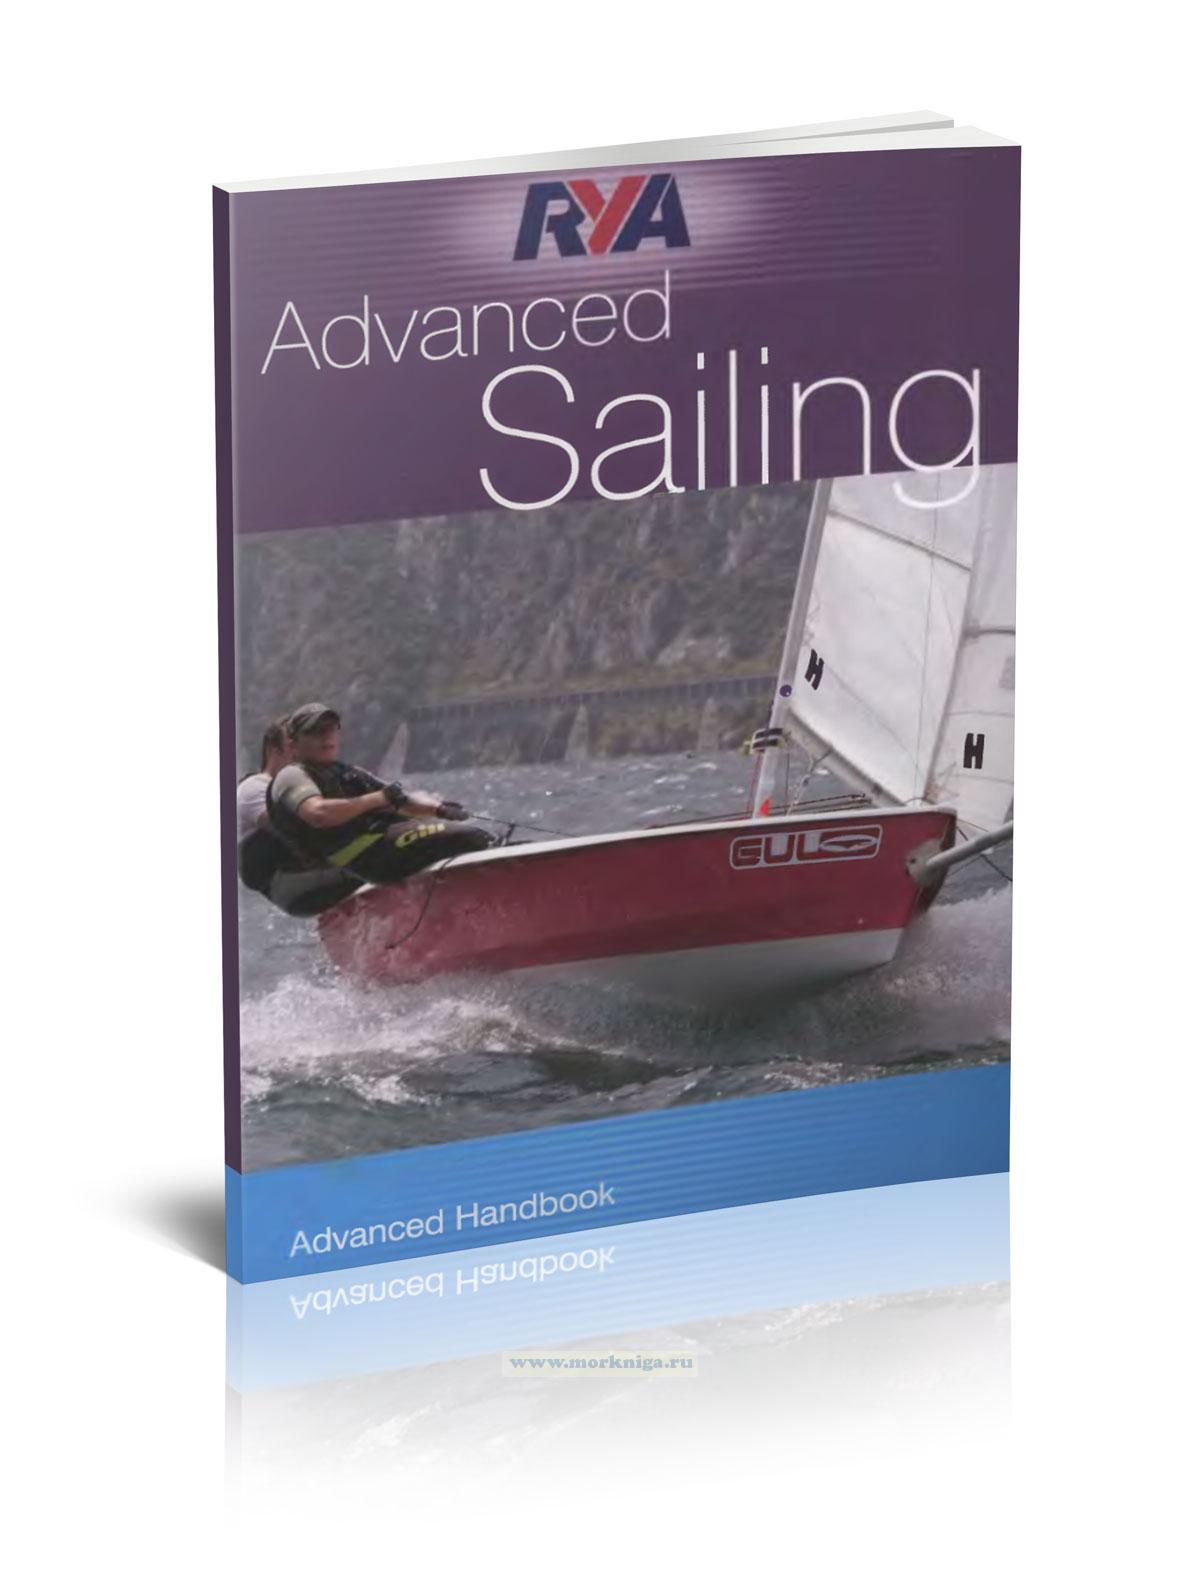 RYA Dinghy Sailing Advanced Handbook.Расширенное руководство по парусному спорту RYA Dinghy